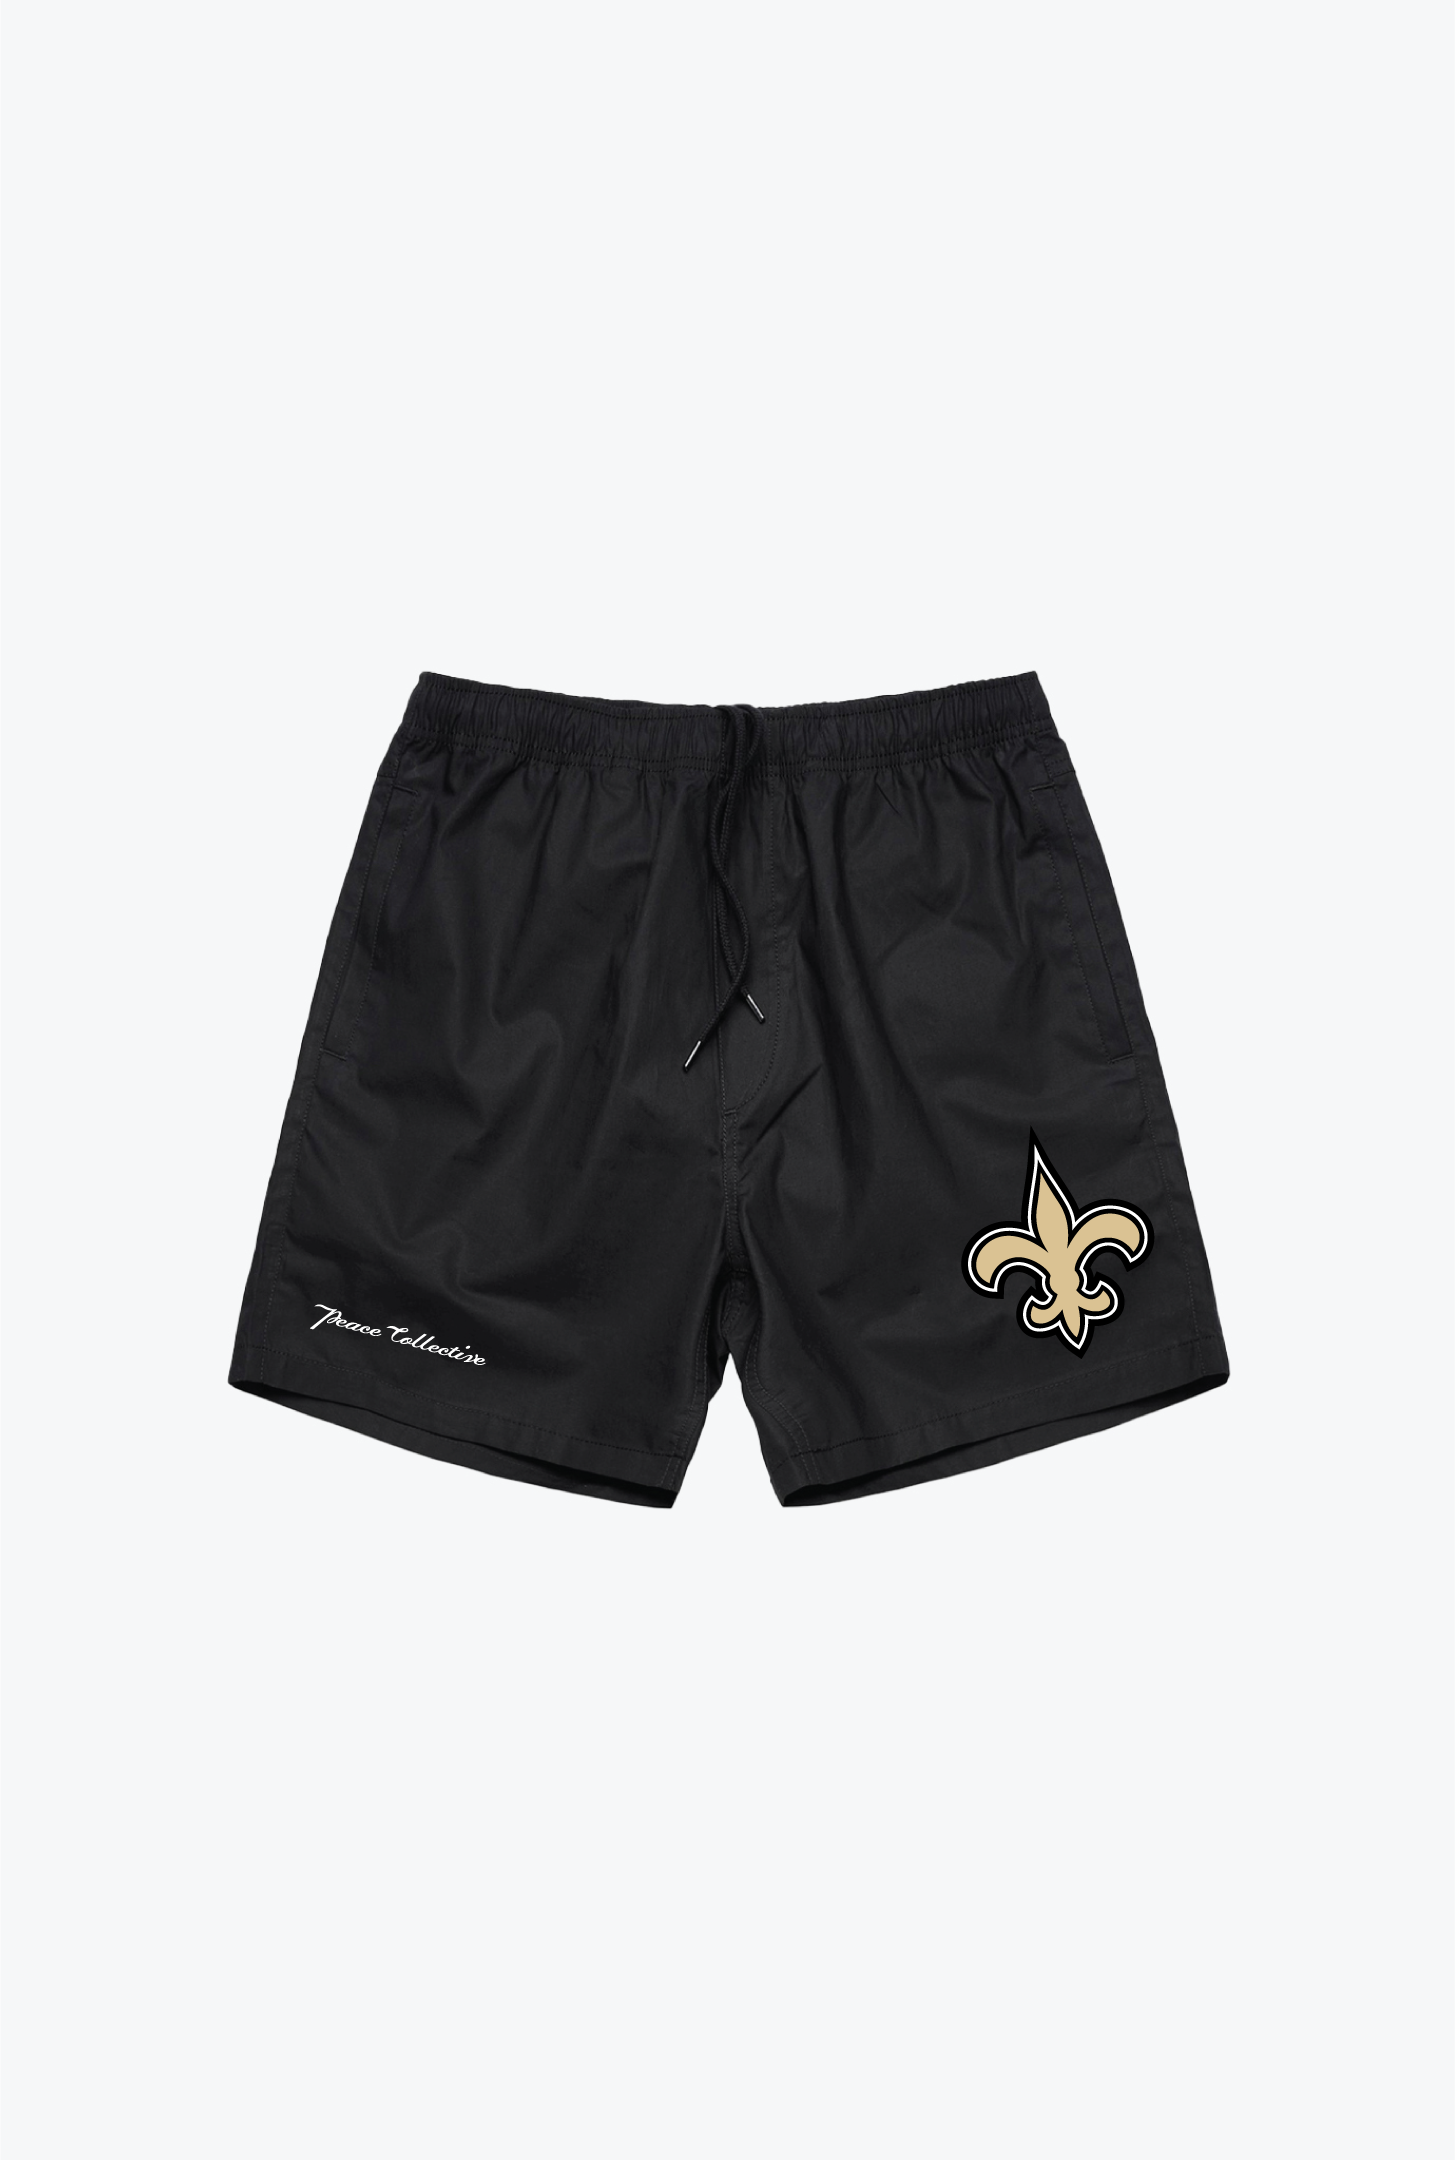 New Orleans Saints Board Shorts - Black